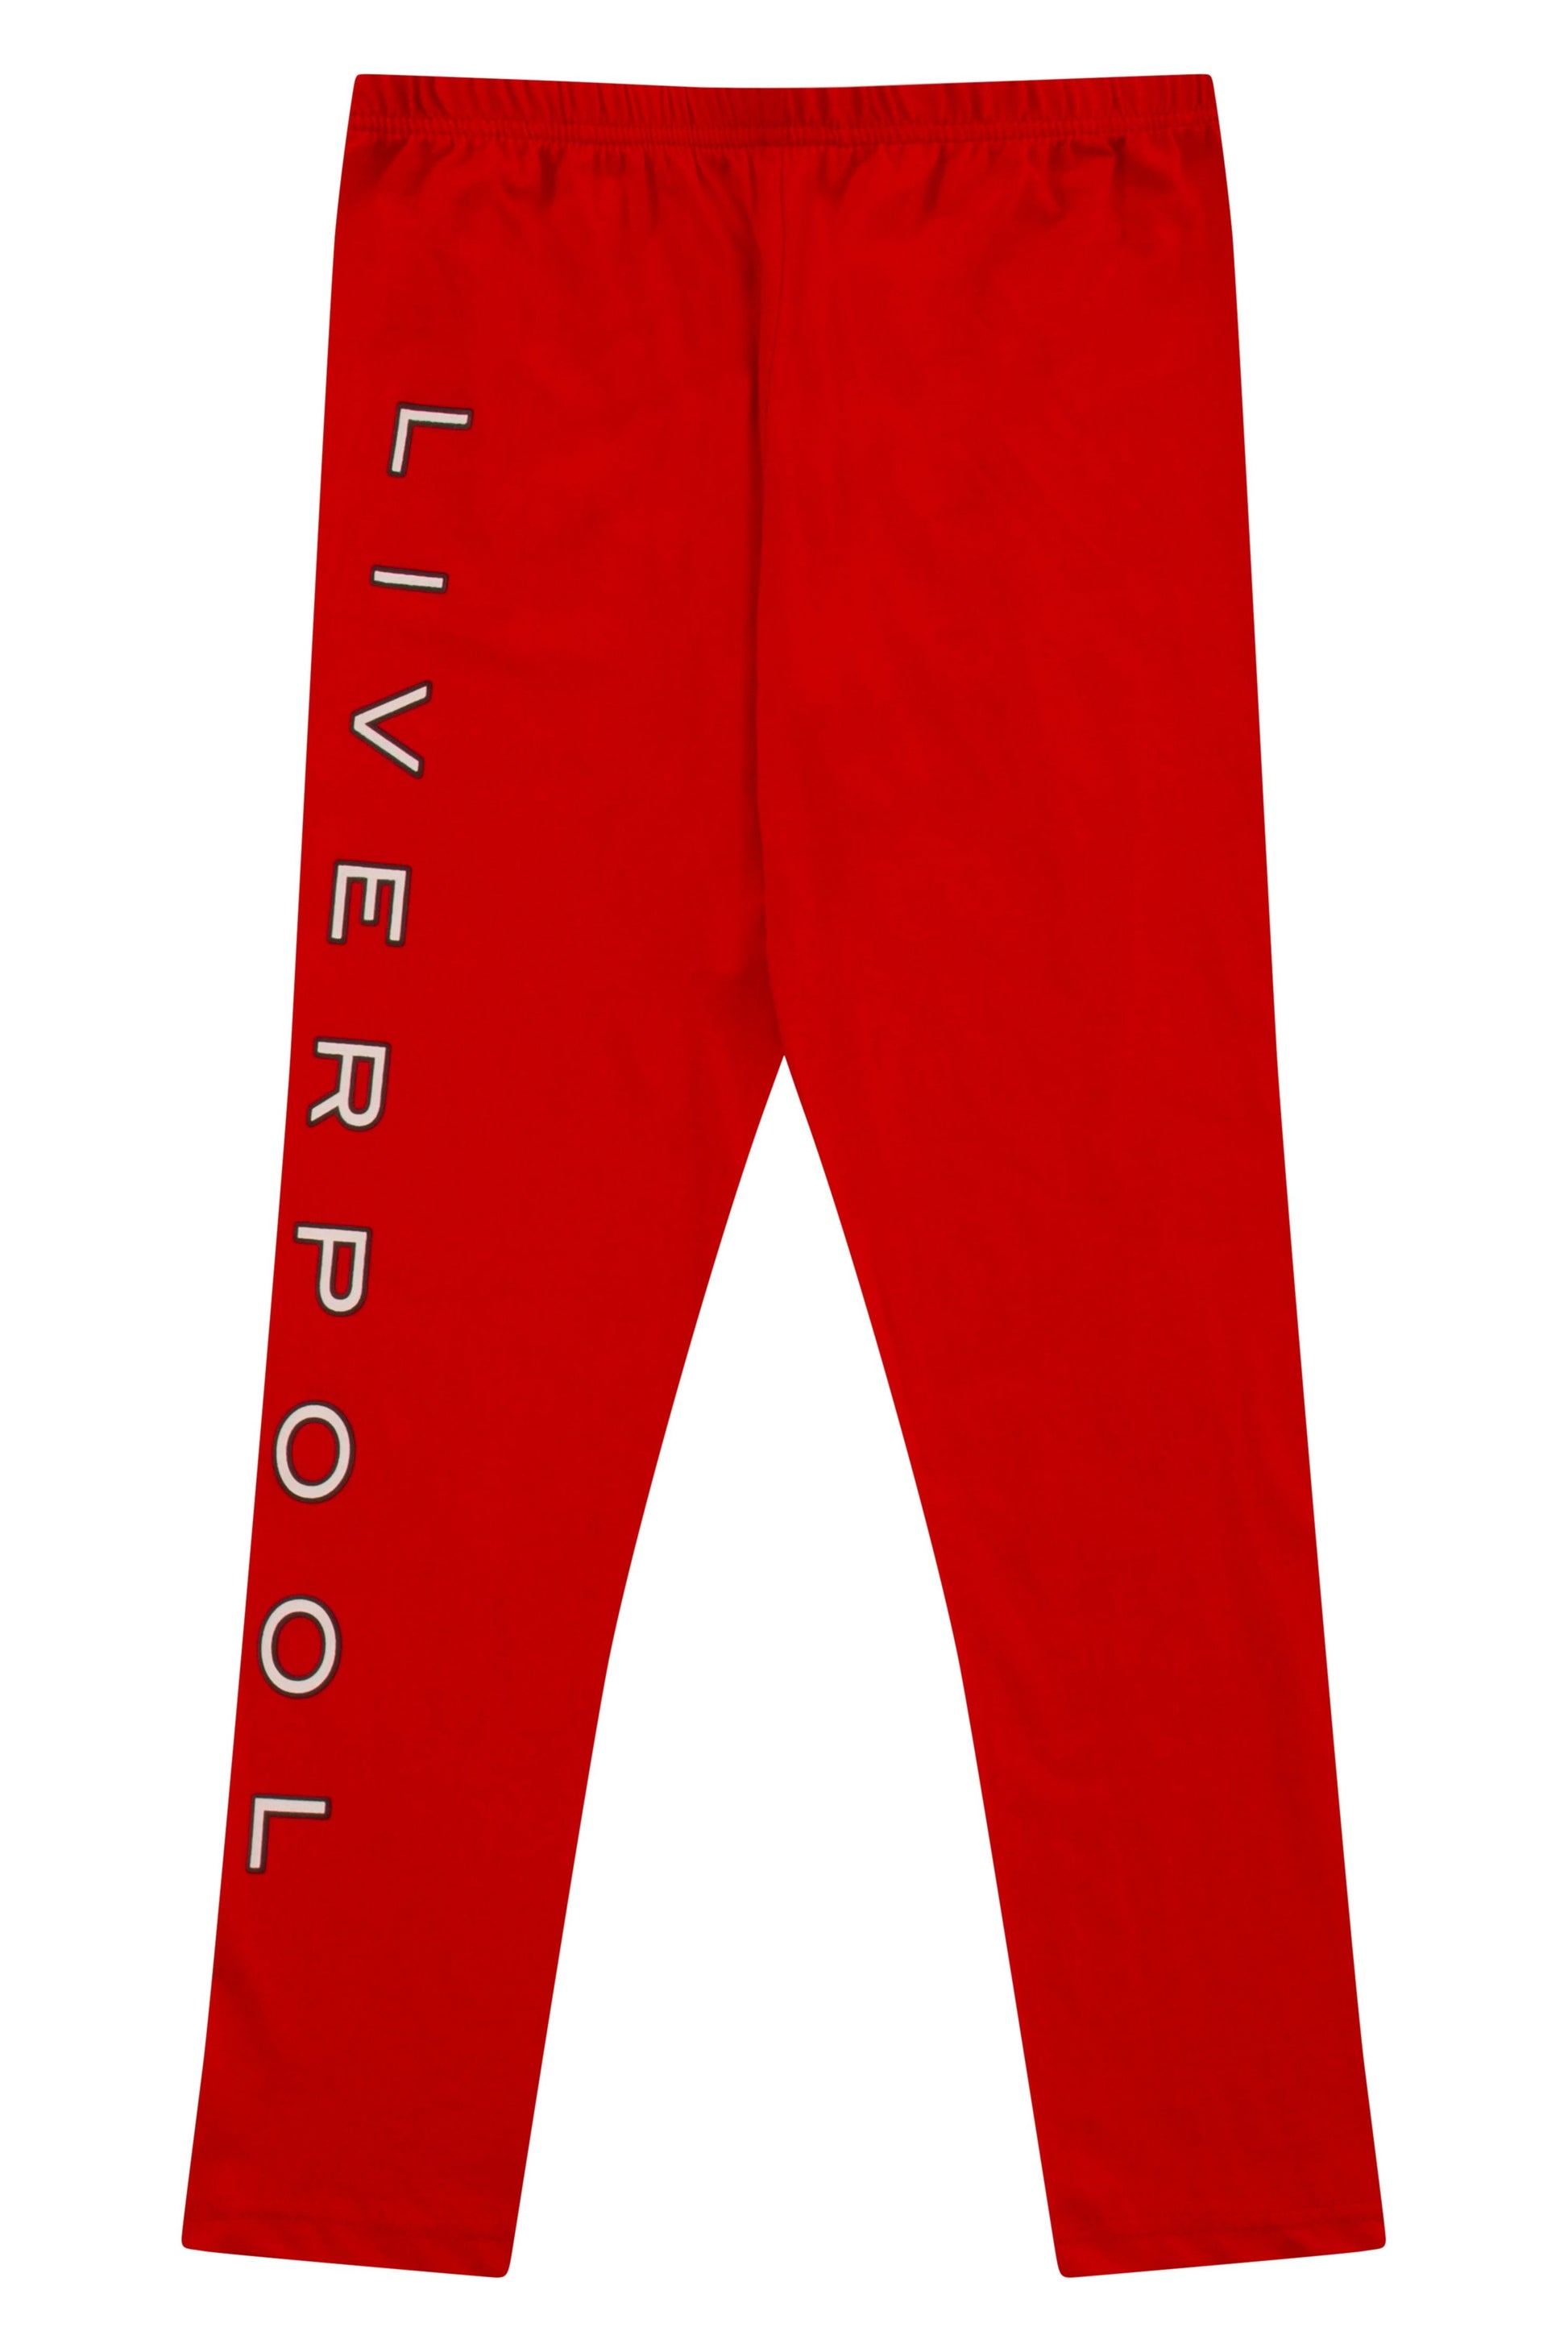 Liverpool FC 'Anfield Road' Long Pyjamas - Pyjamas.com